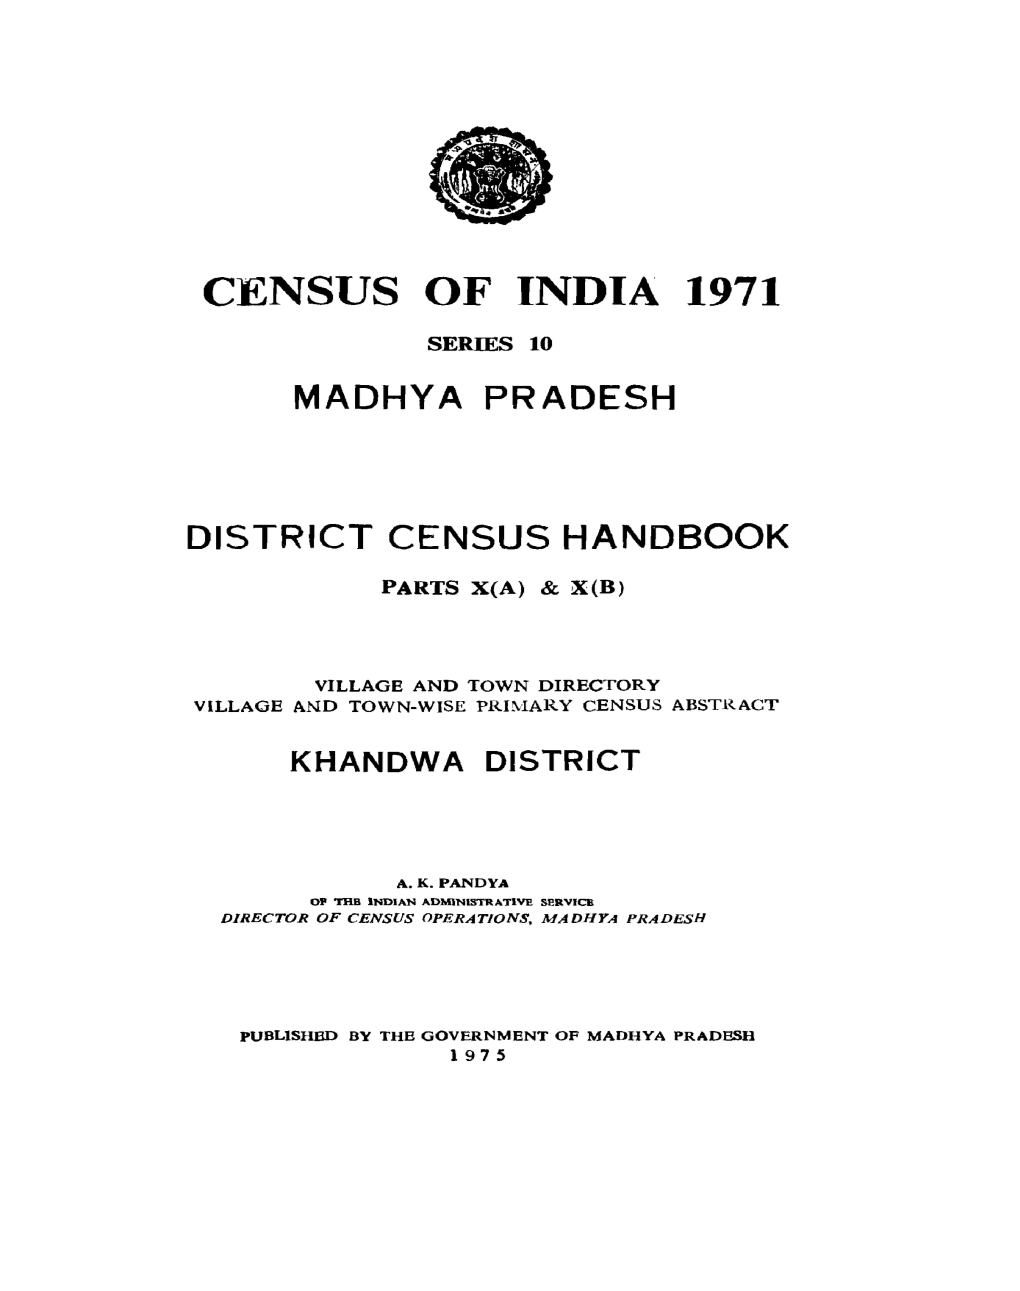 District Census Handbook, Khandwa, Parts X (A) & X